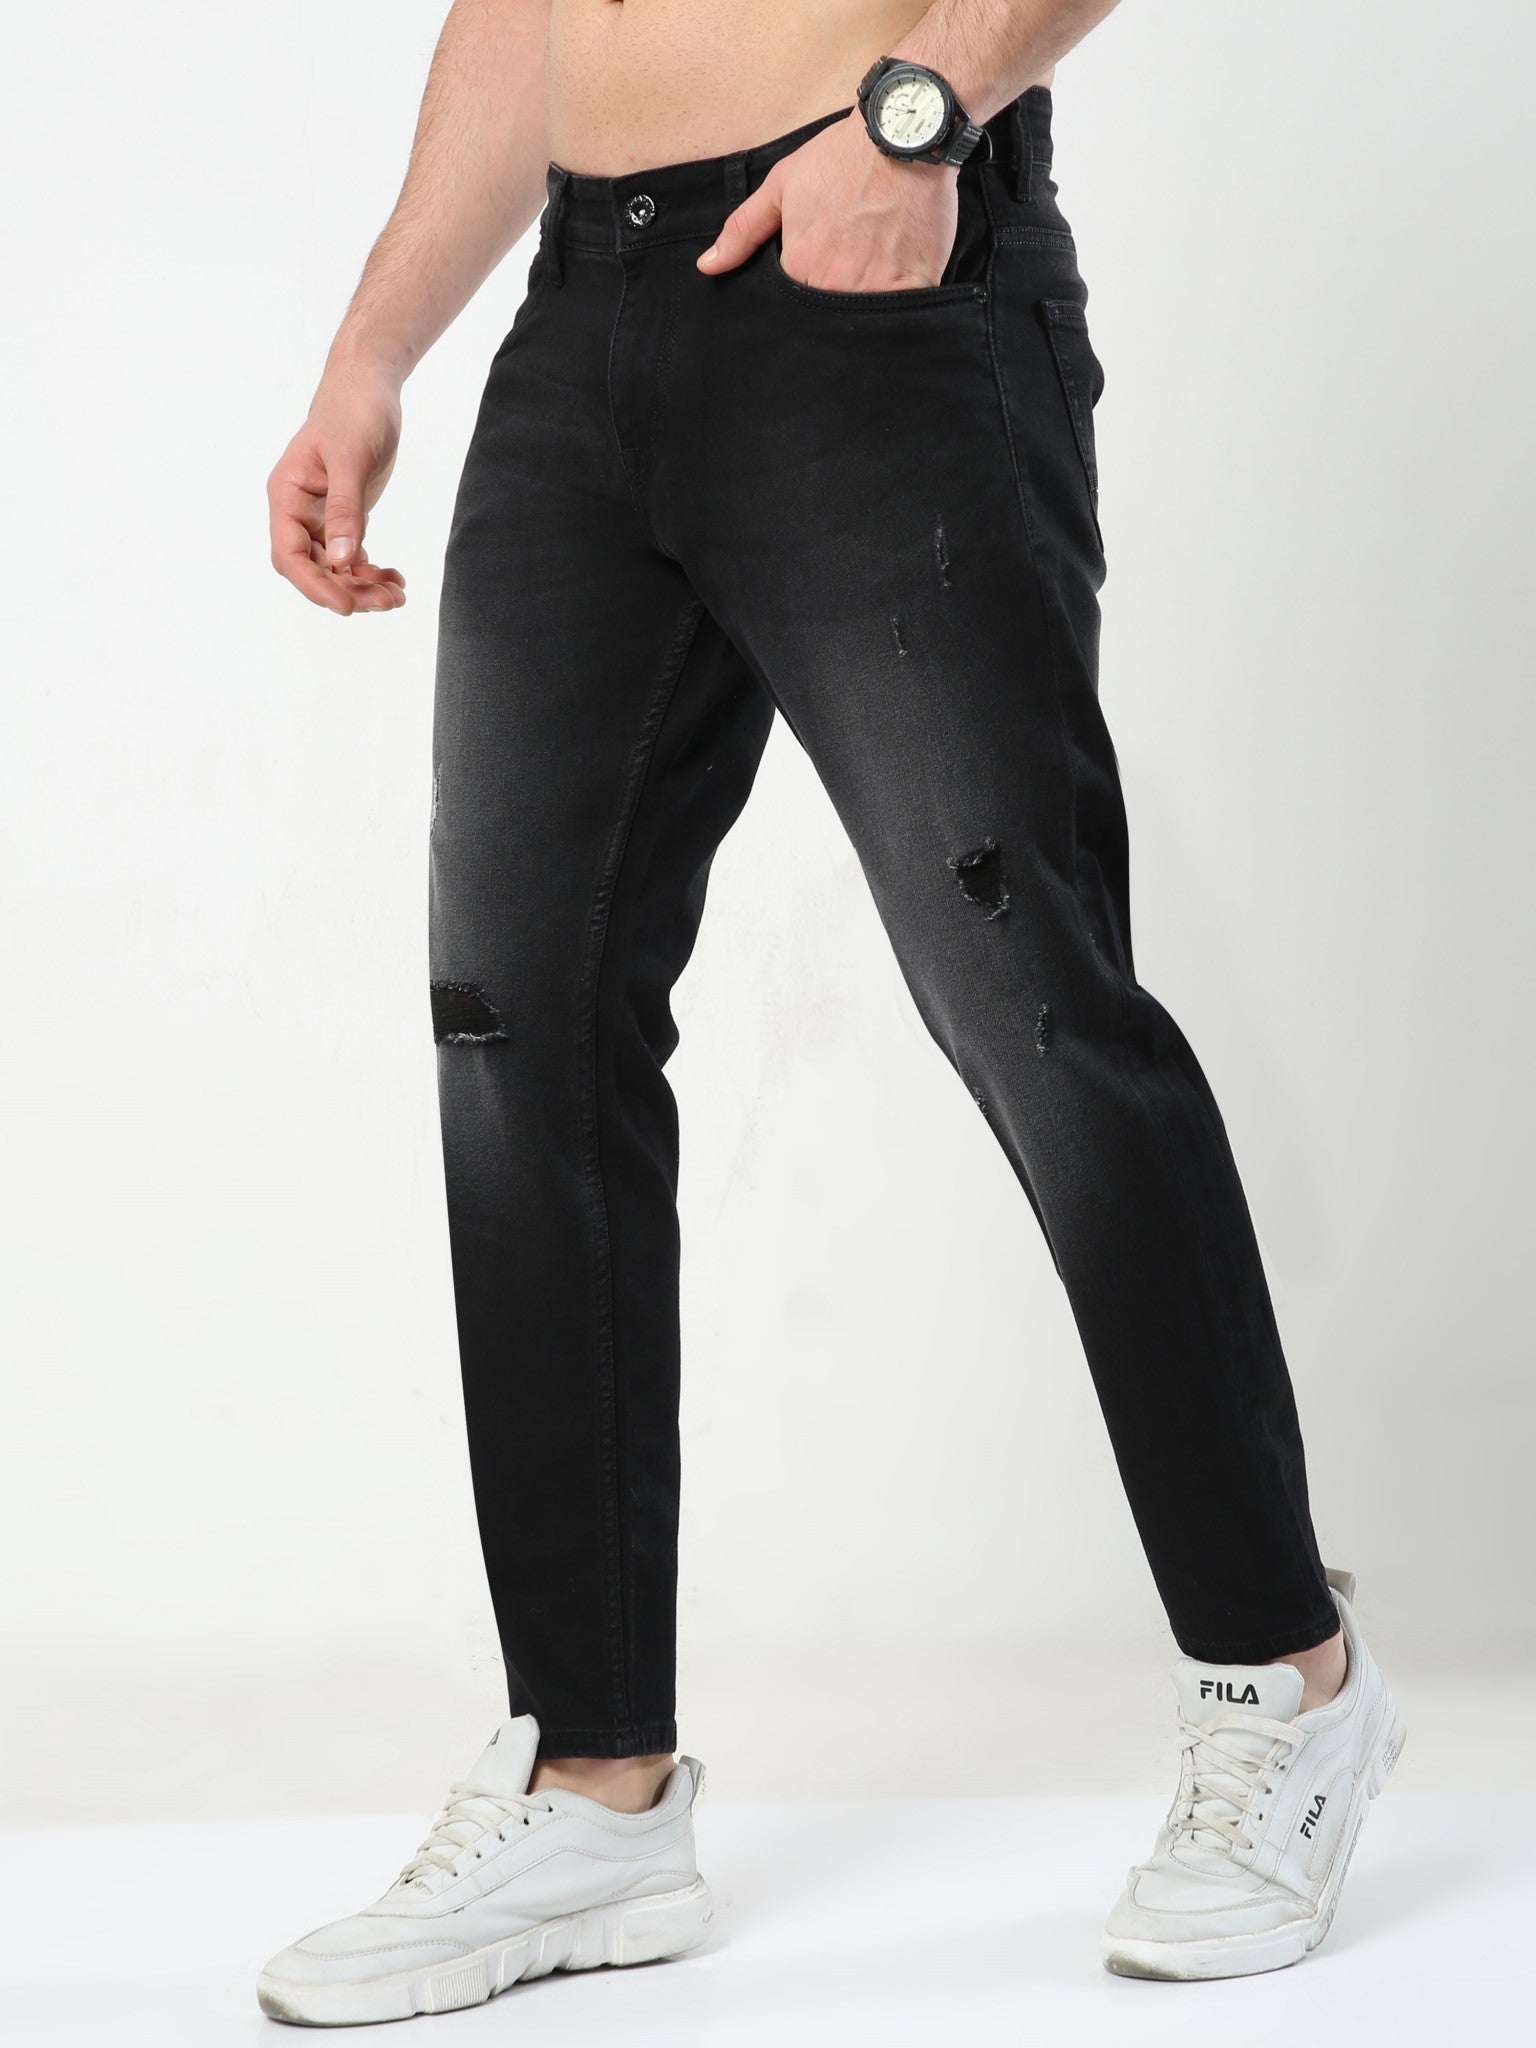 Asphalt Black Skinny Jeans